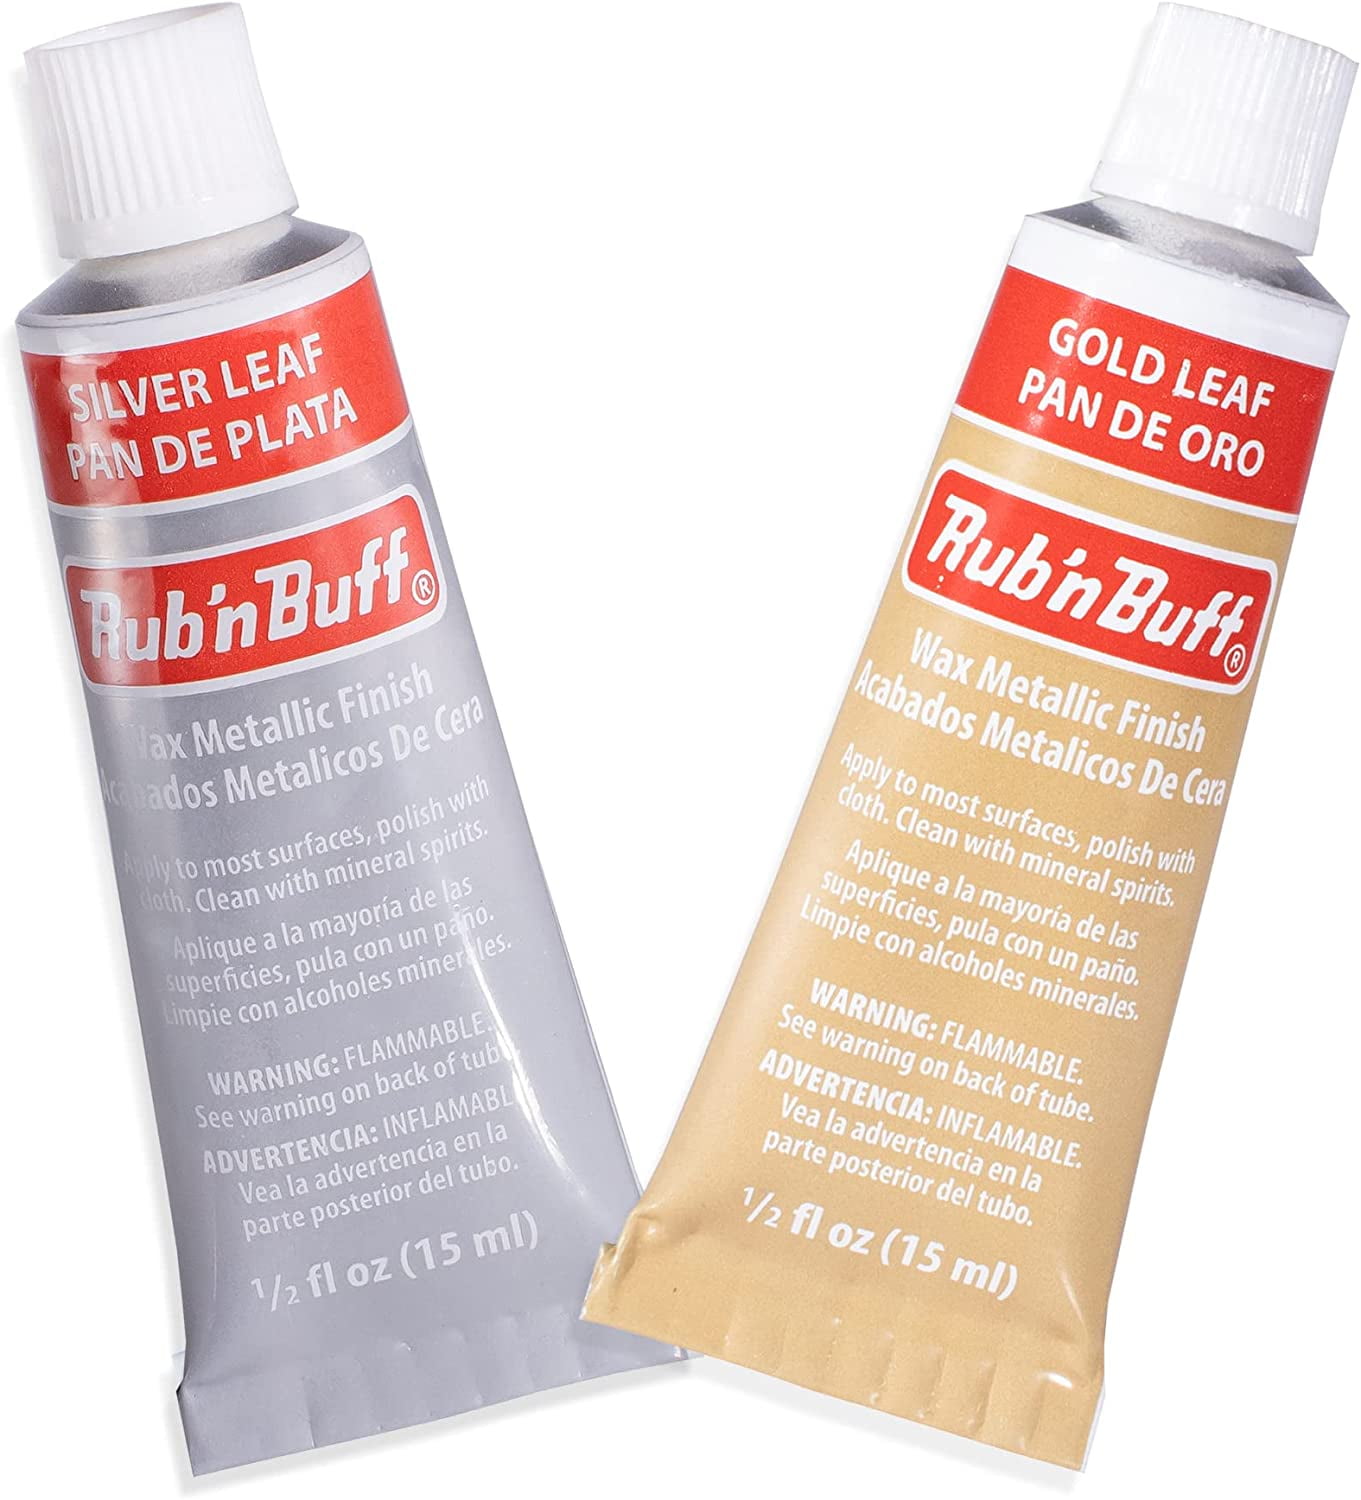 AMACO Rub n Buff Wax Metallic Finish 2 Color Kit - Gold Leaf and Silver Leaf  Rub n Buff 15ml Tubes - Versatile Gilding Wax for Finishing Antiquing and  Restoration - Set